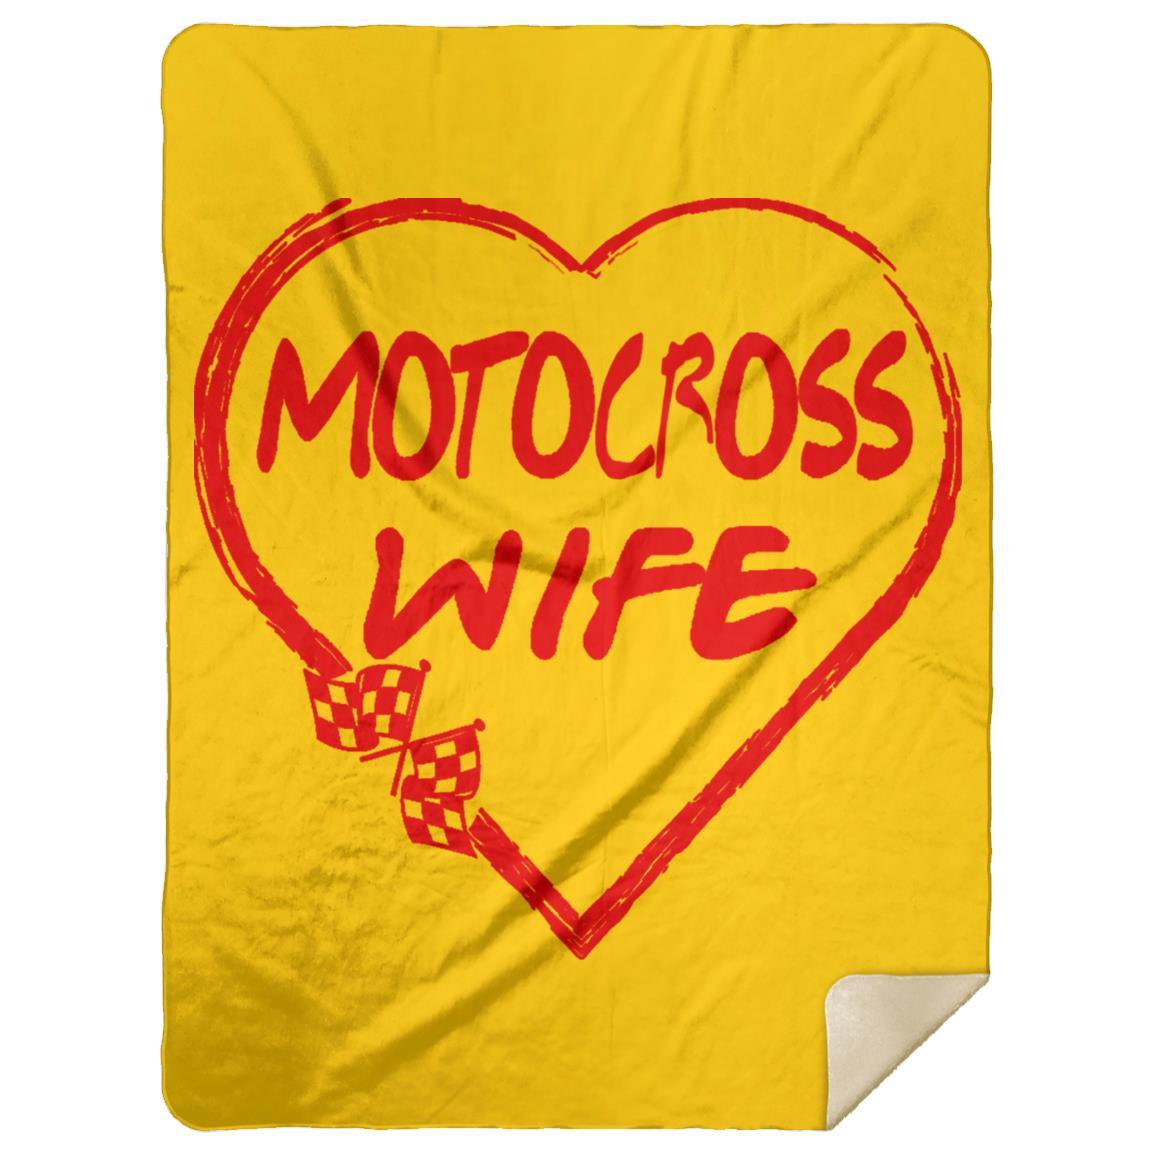 Motocross Wife Premium Mink Sherpa Blanket 60x80